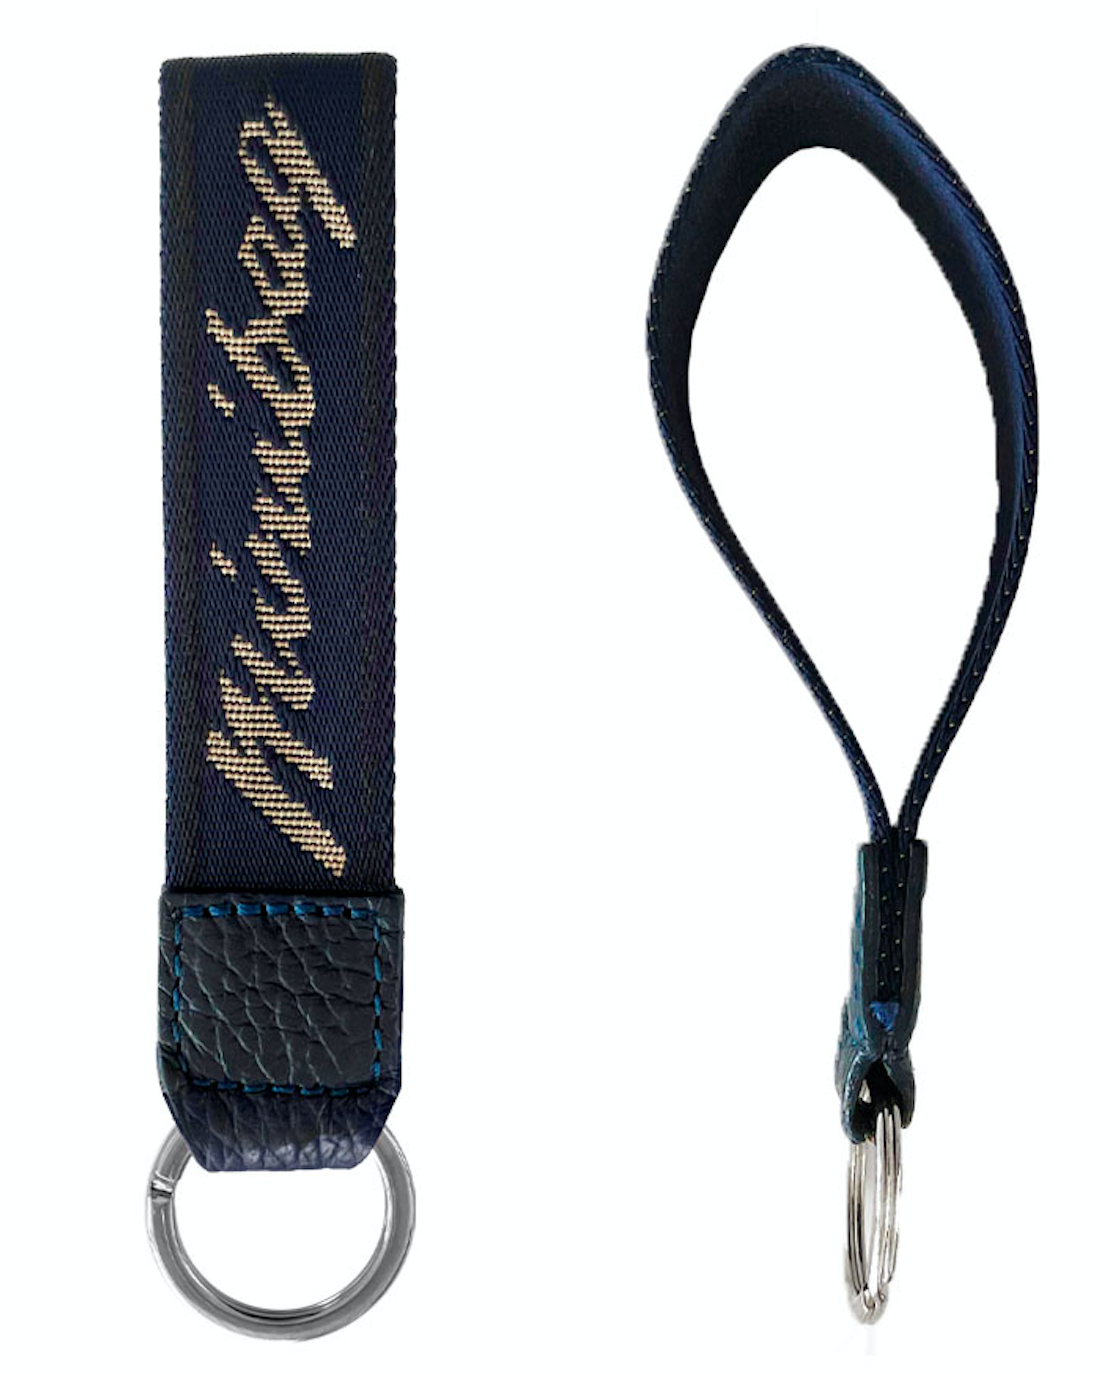 Minibag textile keyring blue, minibag Schlüsselanhänger blau, minibag accessoires, minibag keyring